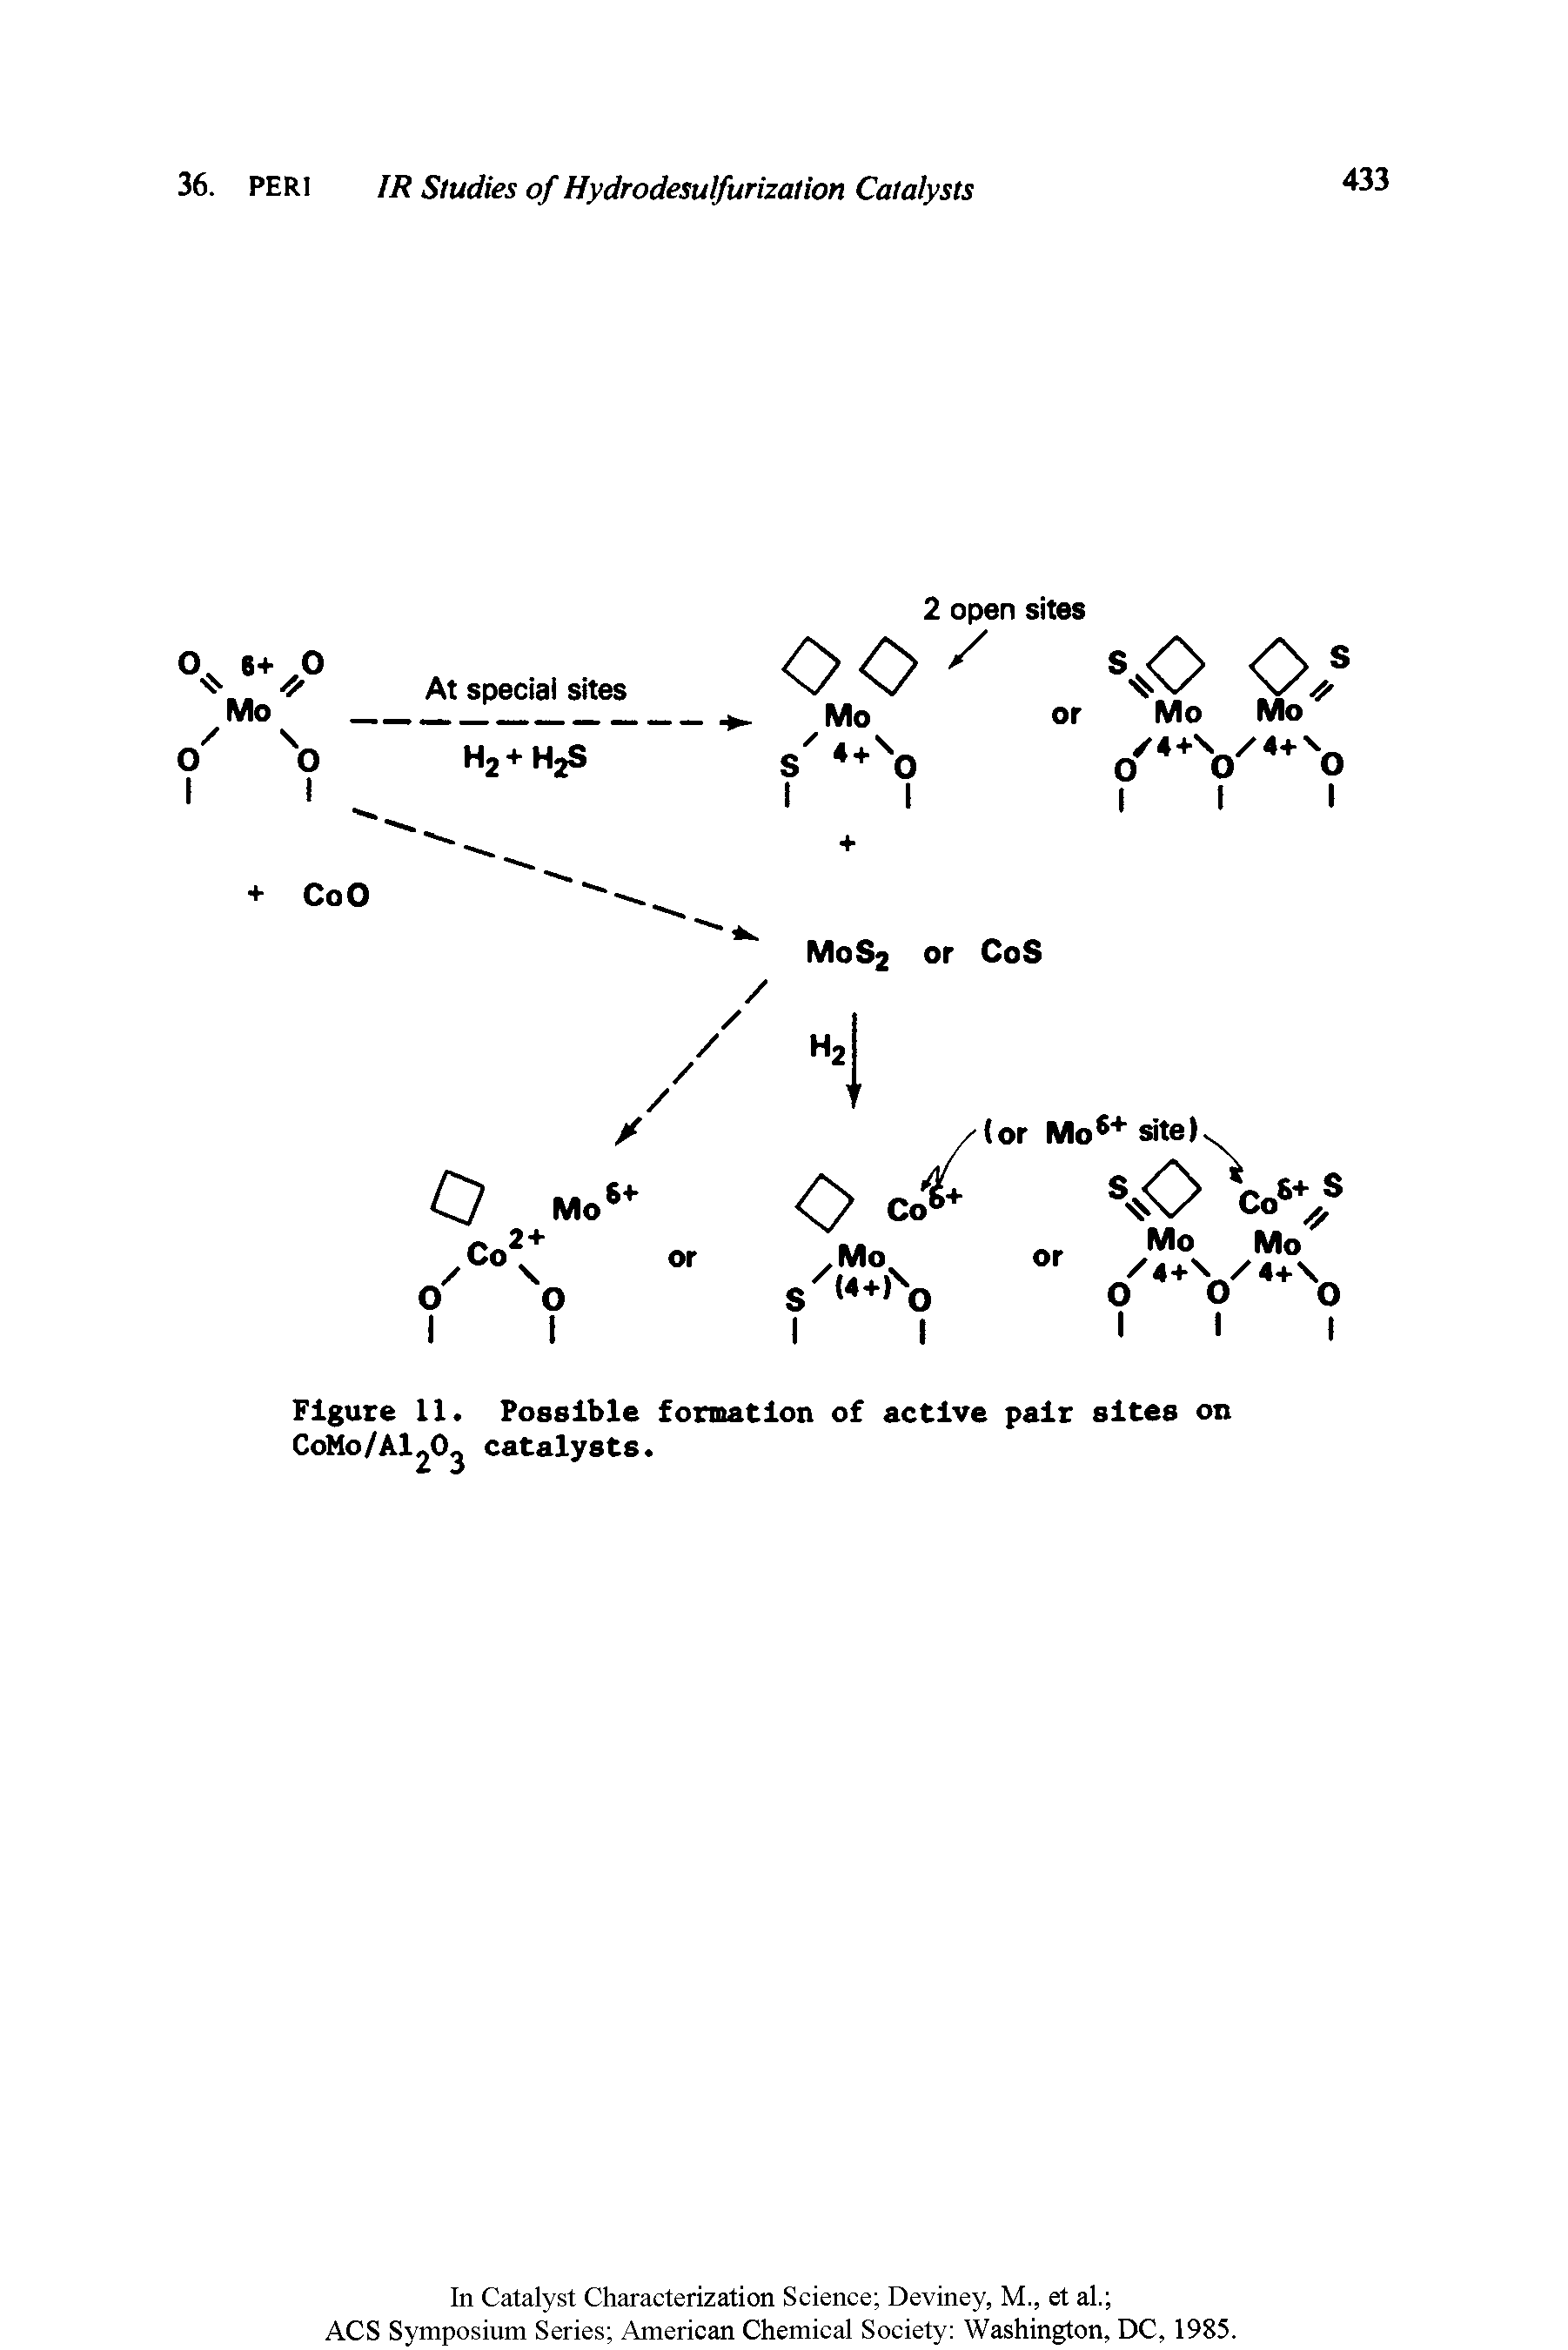 Figure 11. Possible formation of active pair sites on CoMo/Al Oj catalysts.